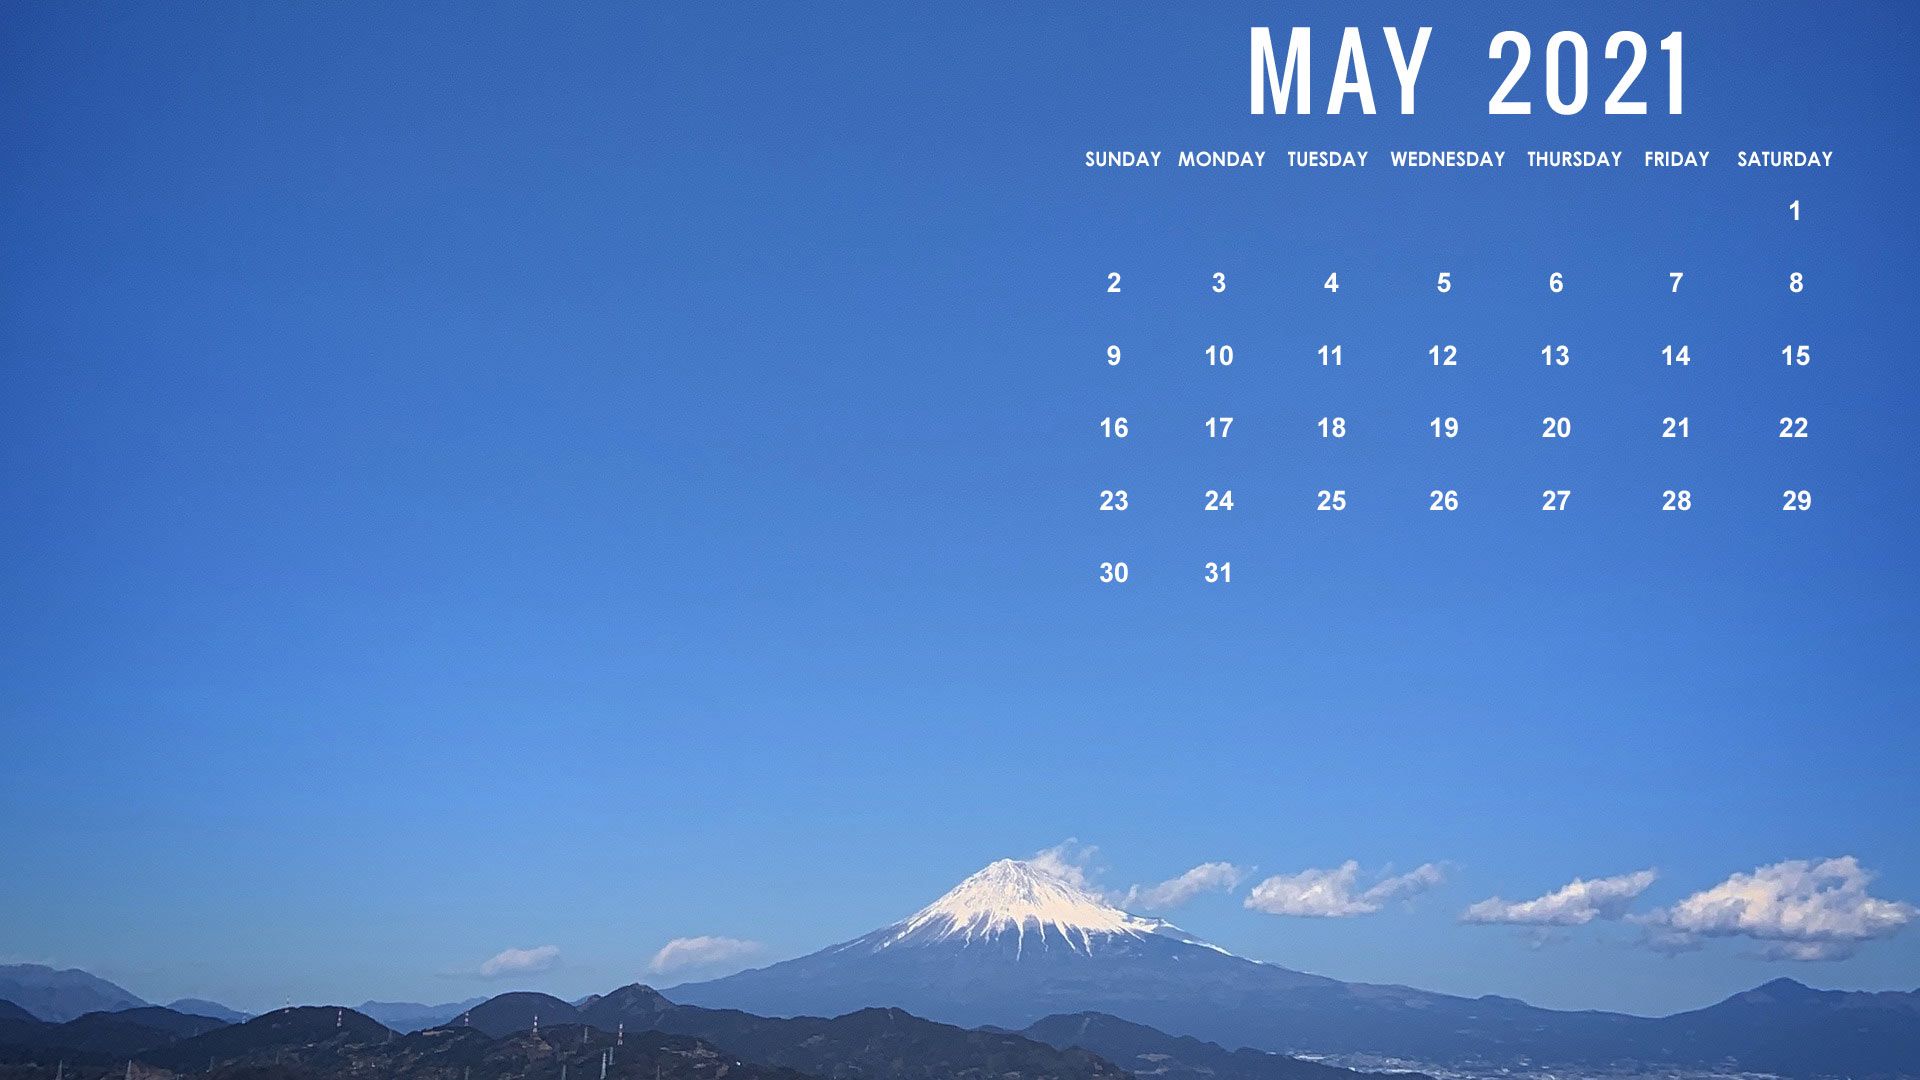 May 2021 calendar wallpaper desktop laptop computer background free